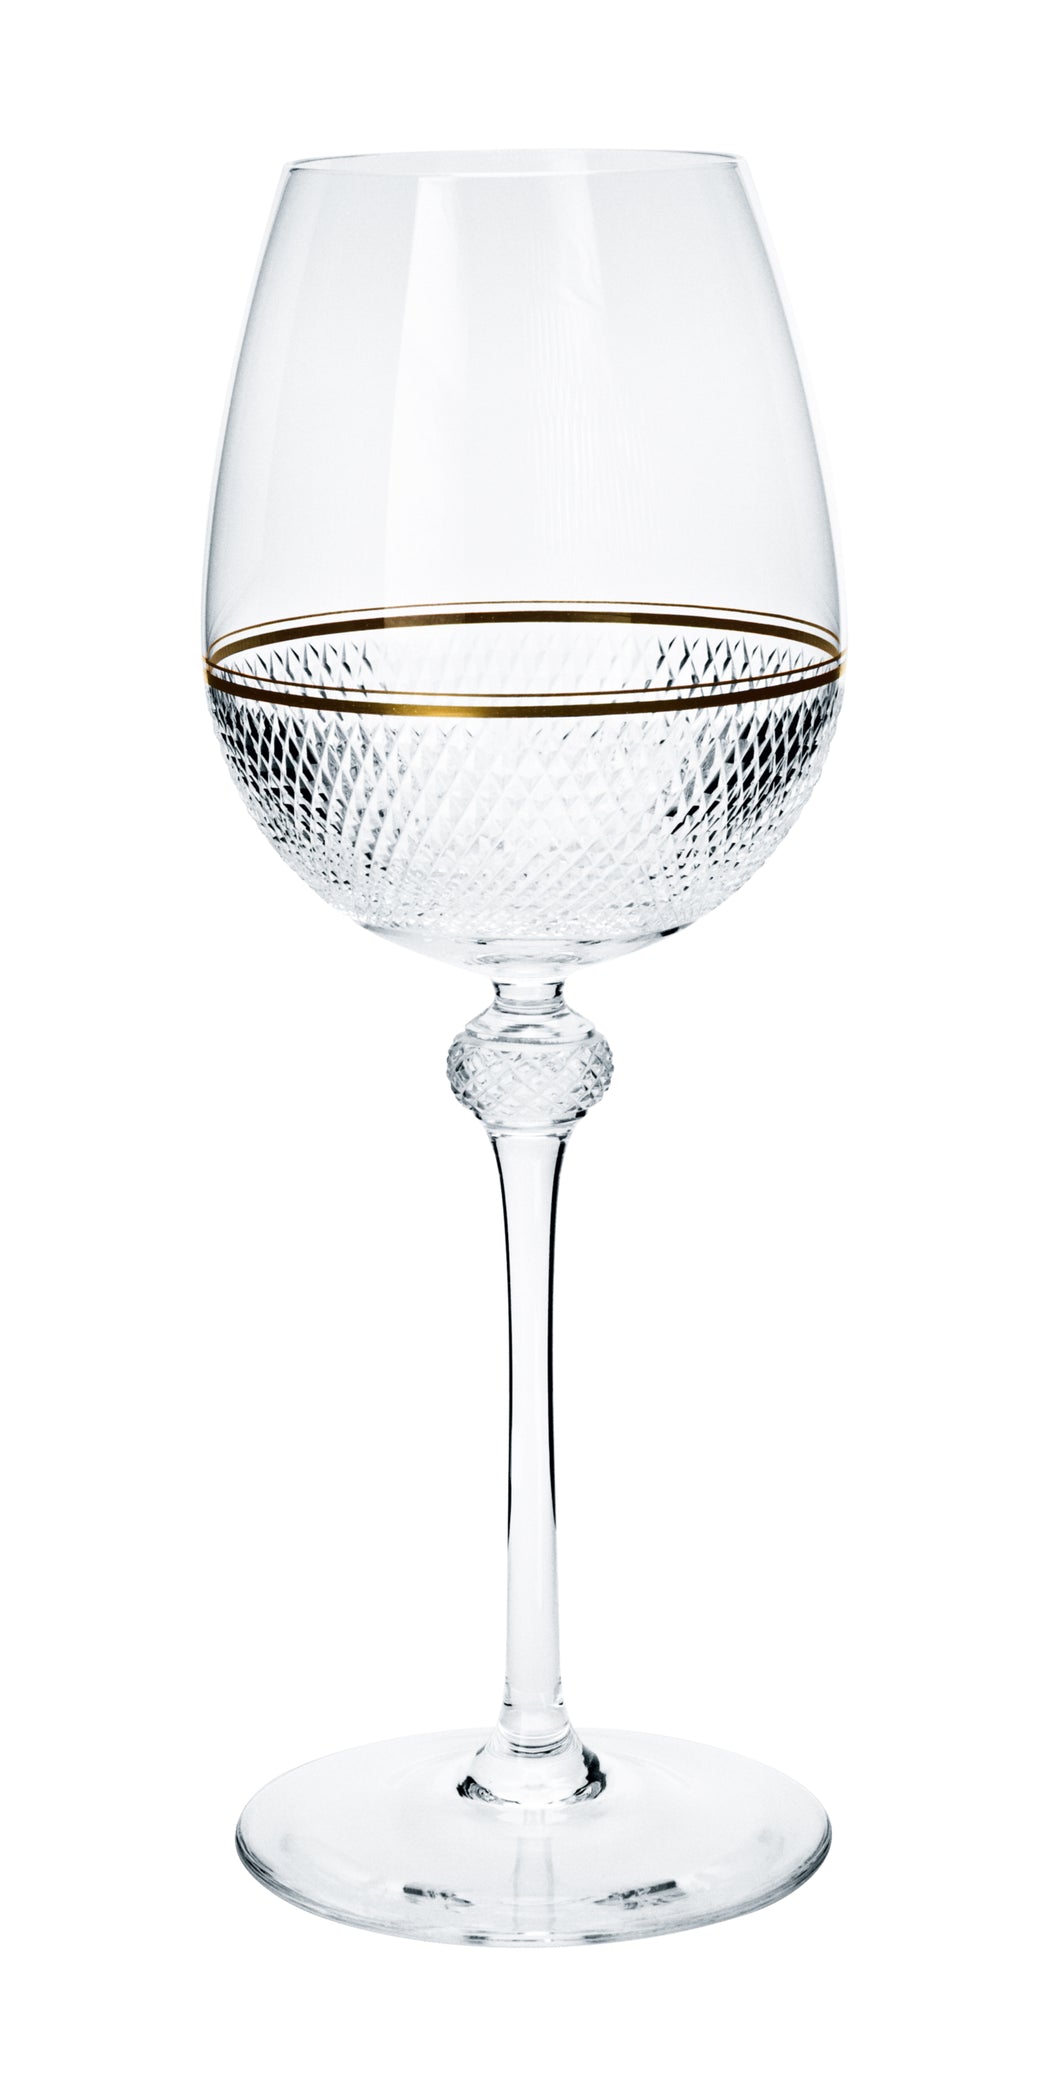 PRESTIGE klar, Diamantschliff & Goldrand - Weinglas 245  mm